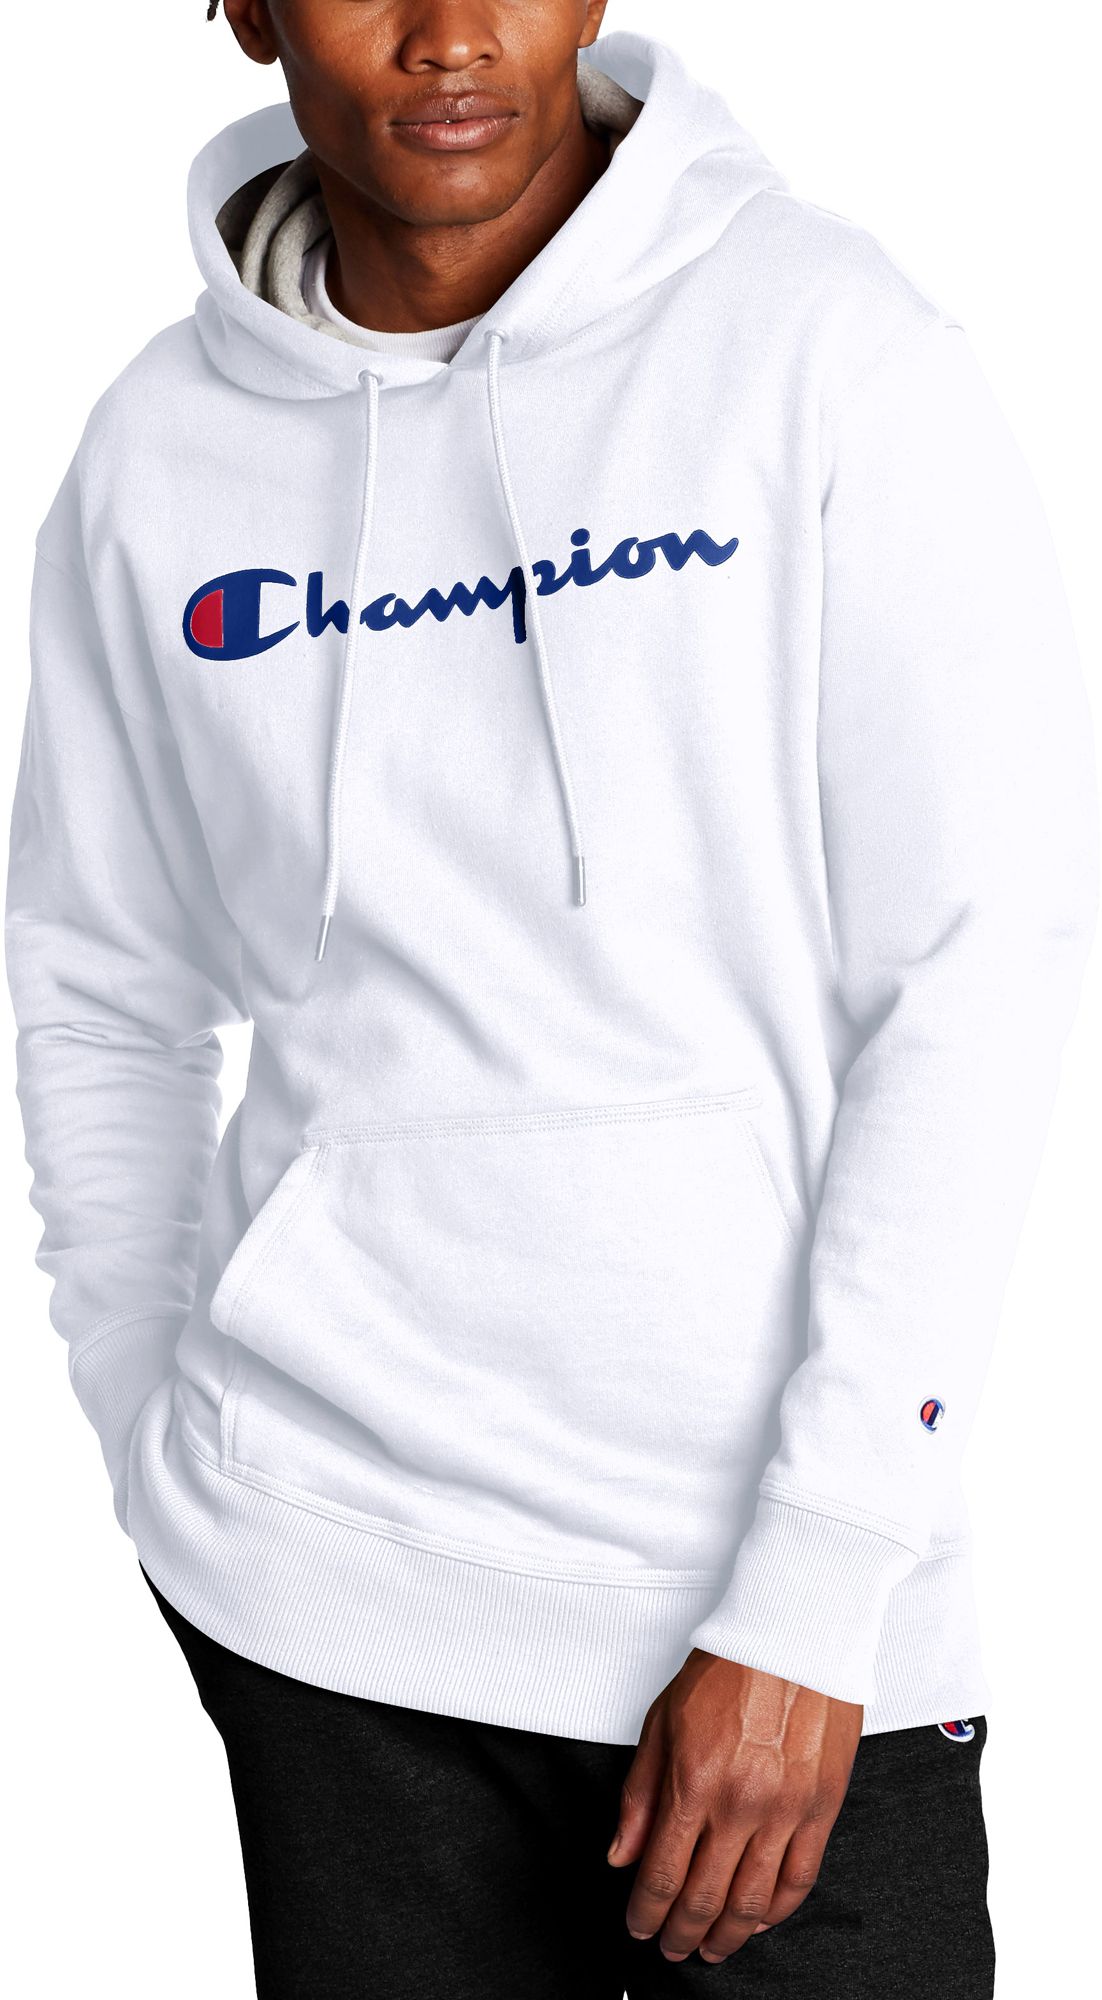 dicks champion hoodie